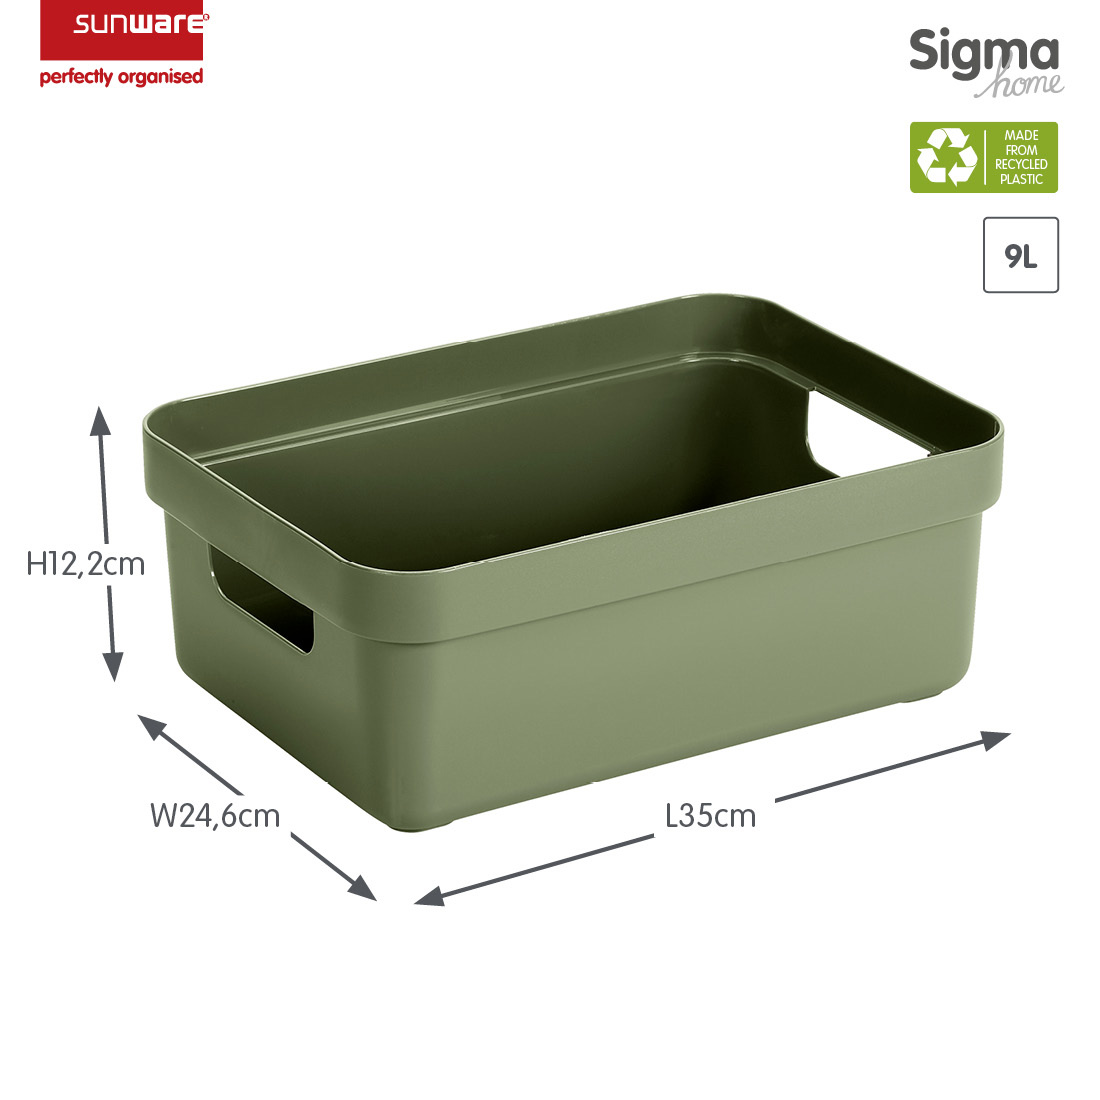 Sigma home Aufbewahrungsbox 9L dunkel grün